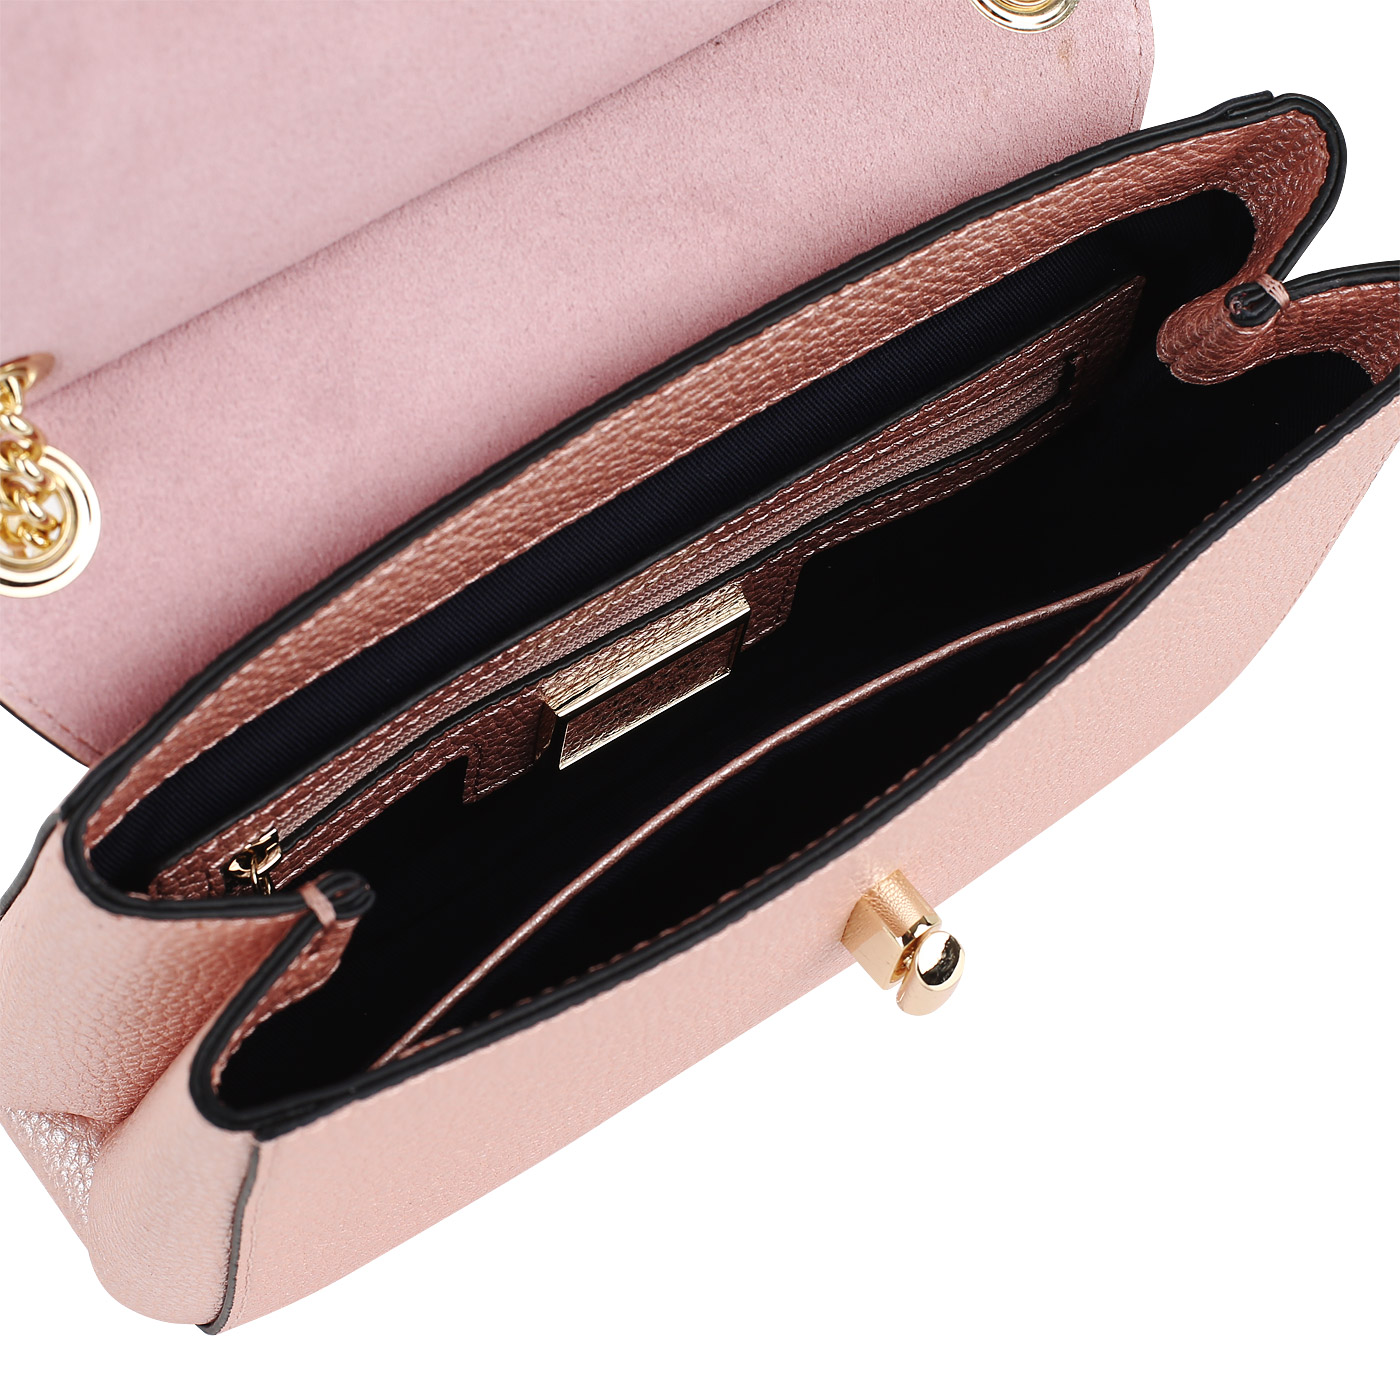 Розовая сумочка кросс-боди Cromia Mina